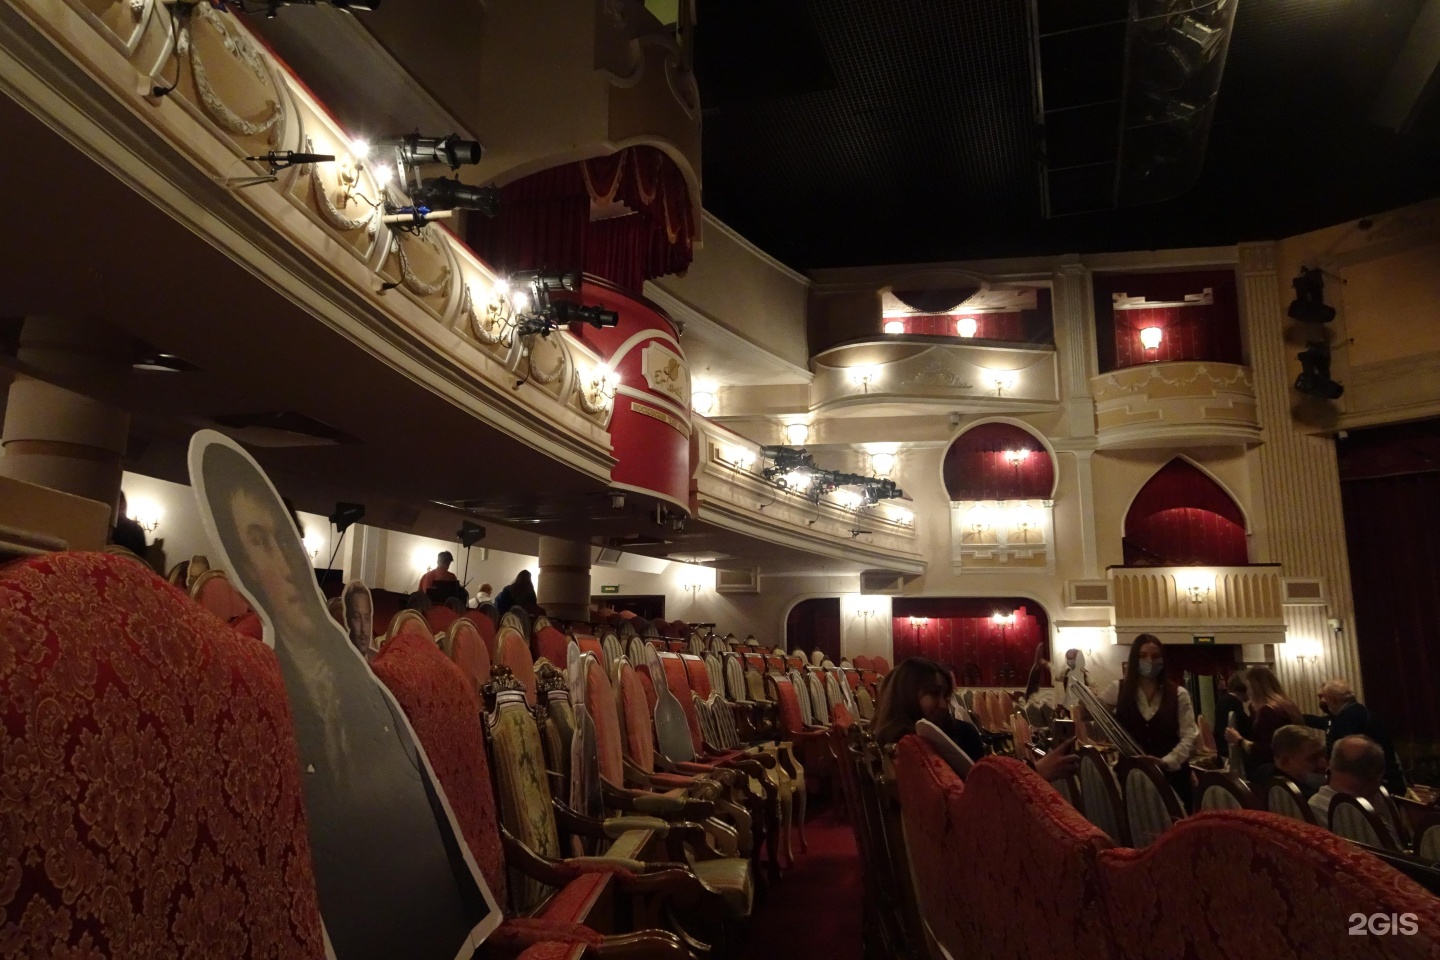 Театр калягина